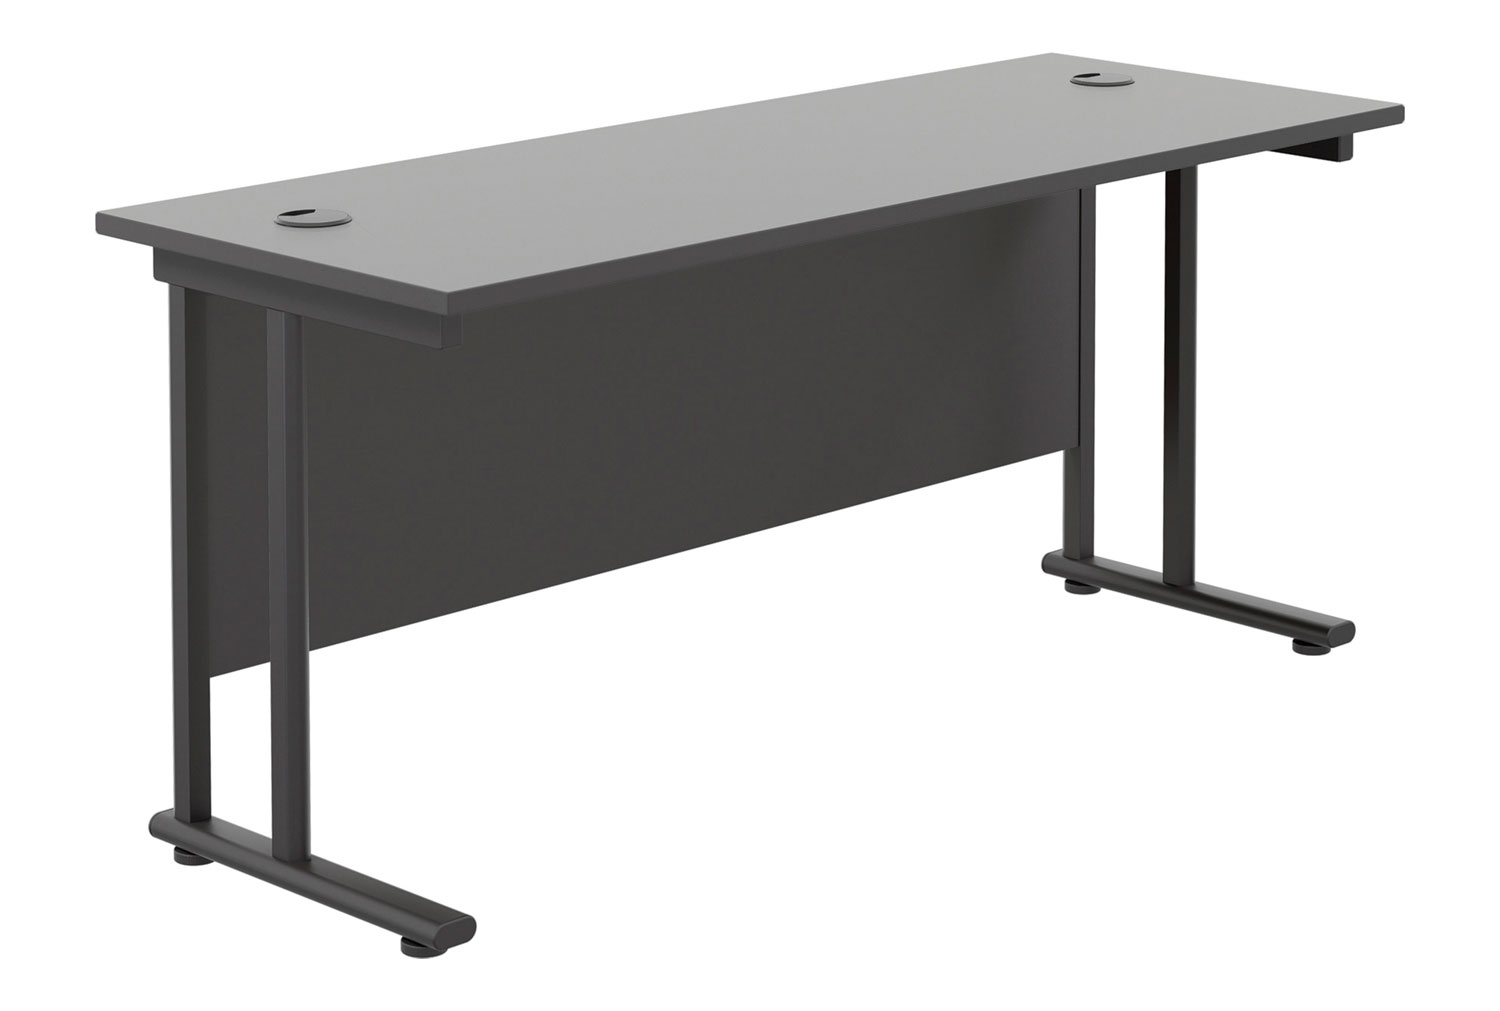 All Black Double C-Leg Narrow Rectangular Office Desk, 180wx60dx73h (cm), Express Delivery